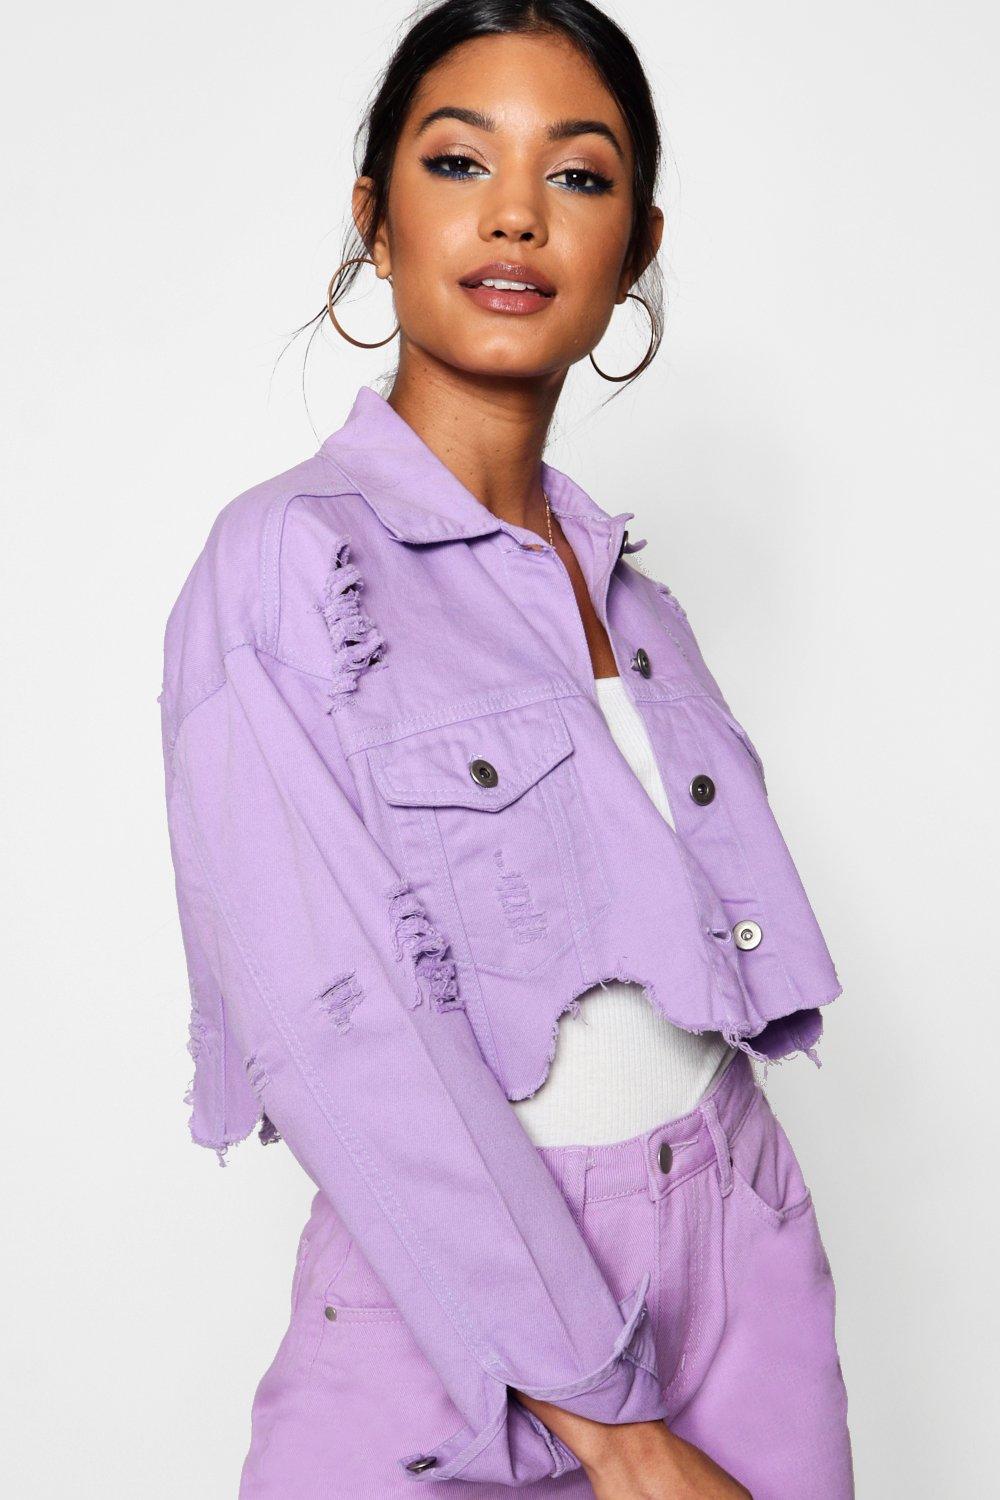 Anabelle Purple Crop Denim Jacket - Women, Best Price and Reviews